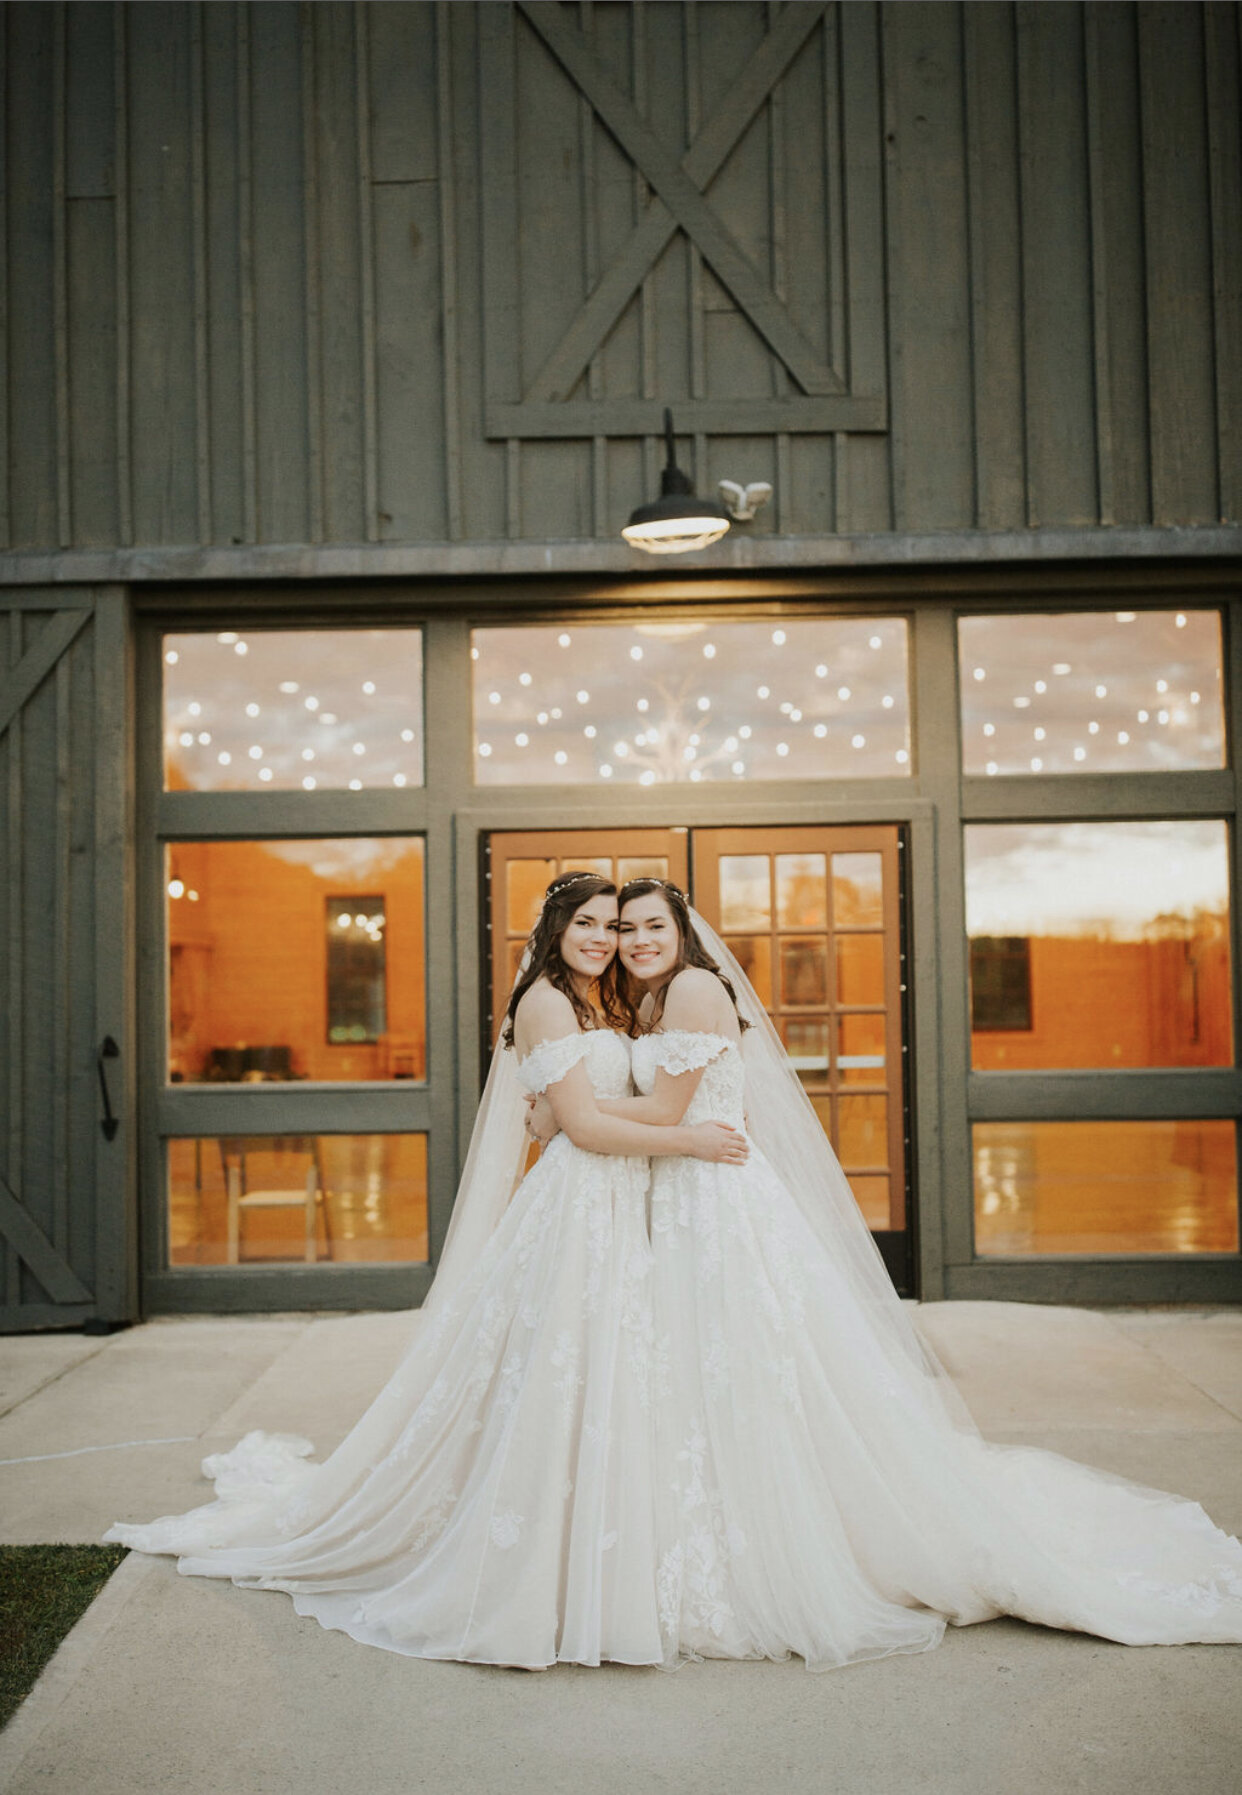 twin sister brides at Oakland Farm double wedding